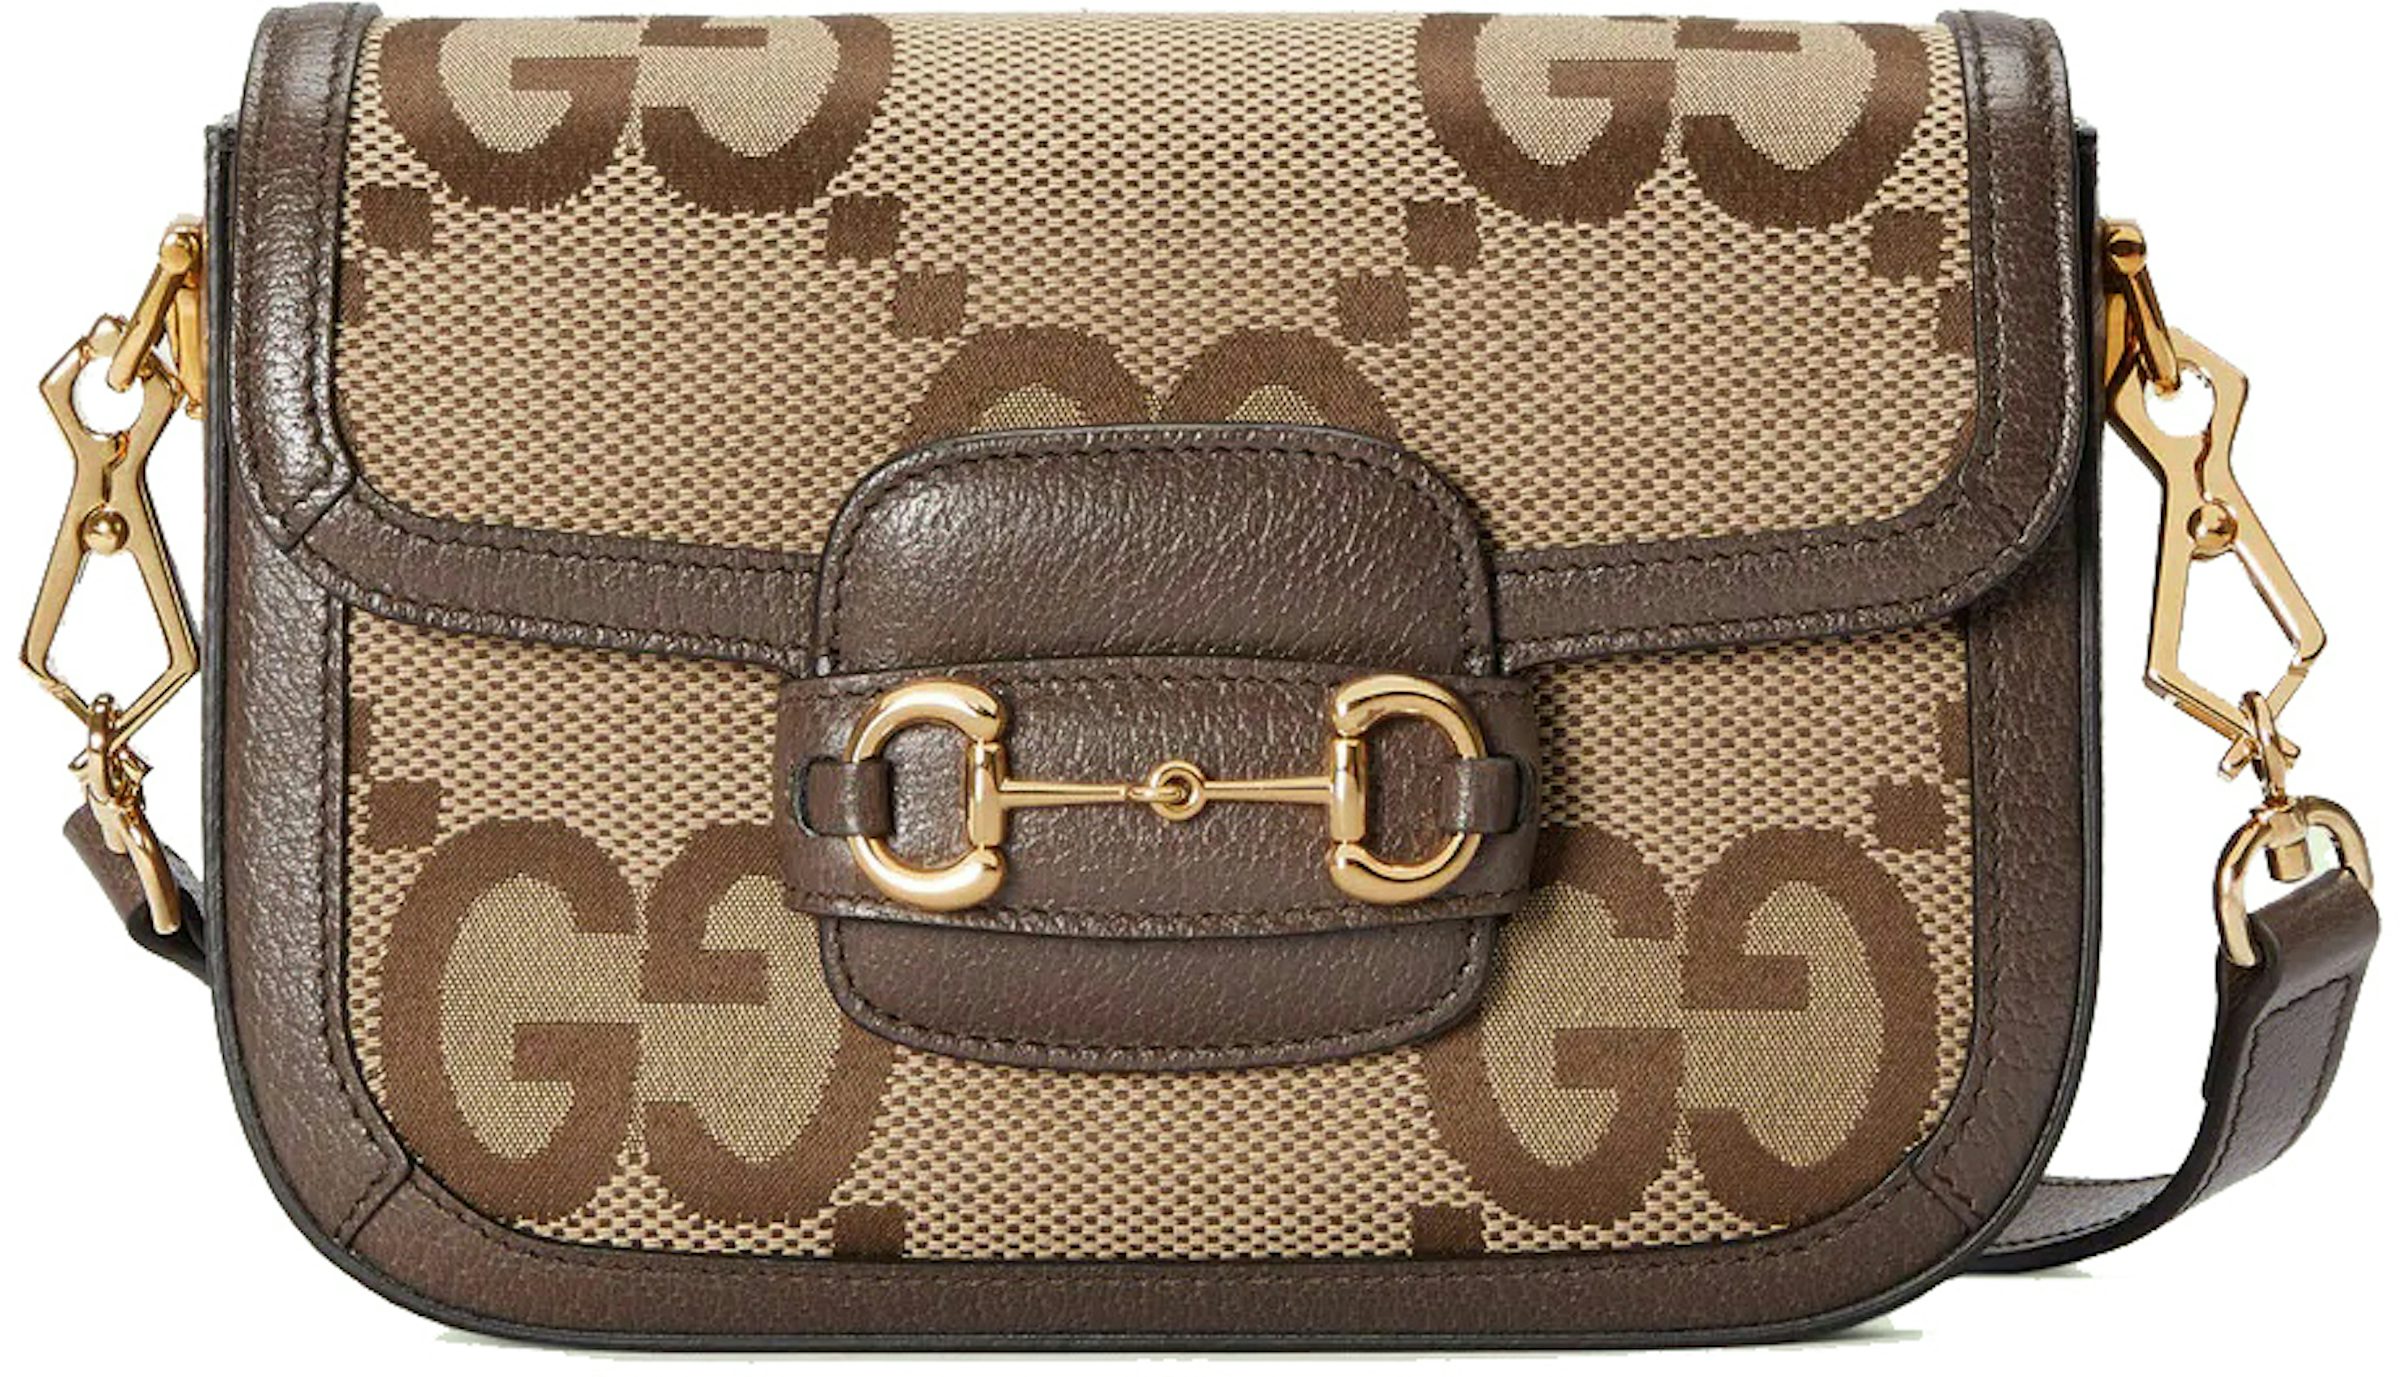 Jumbo GG small duffle bag in camel and ebony GG canvas